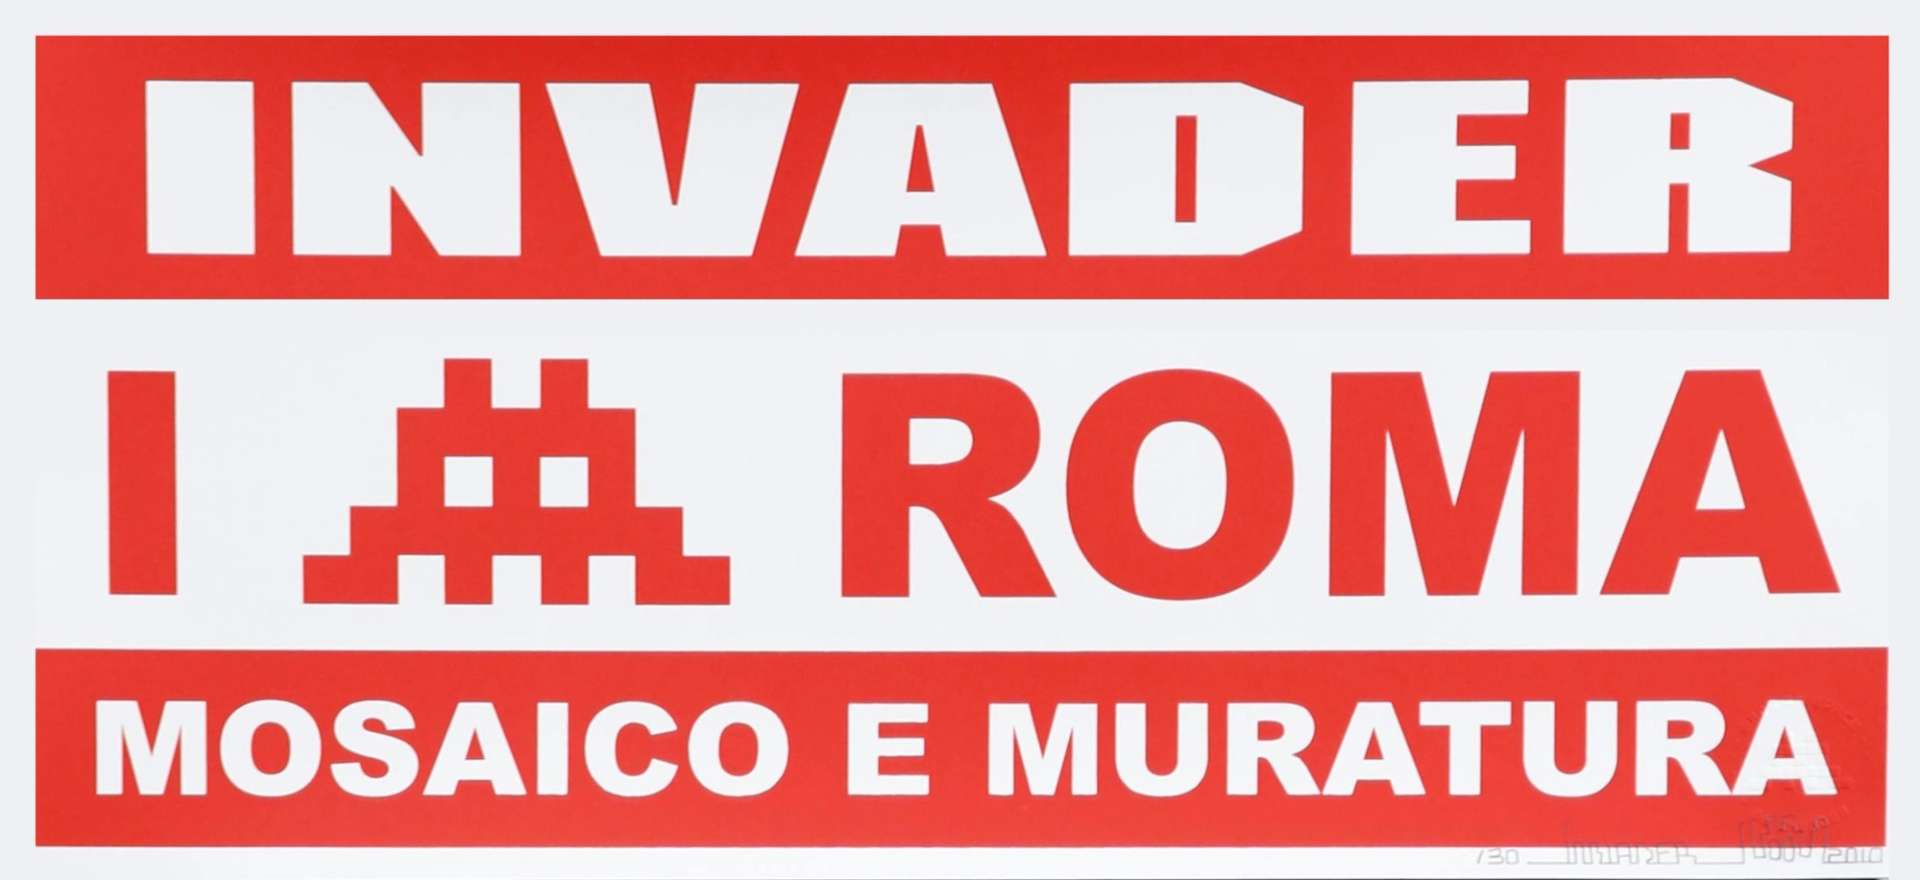 Mosaico E Muratura Roma (red) - Signed Print by Invader 2010 - MyArtBroker